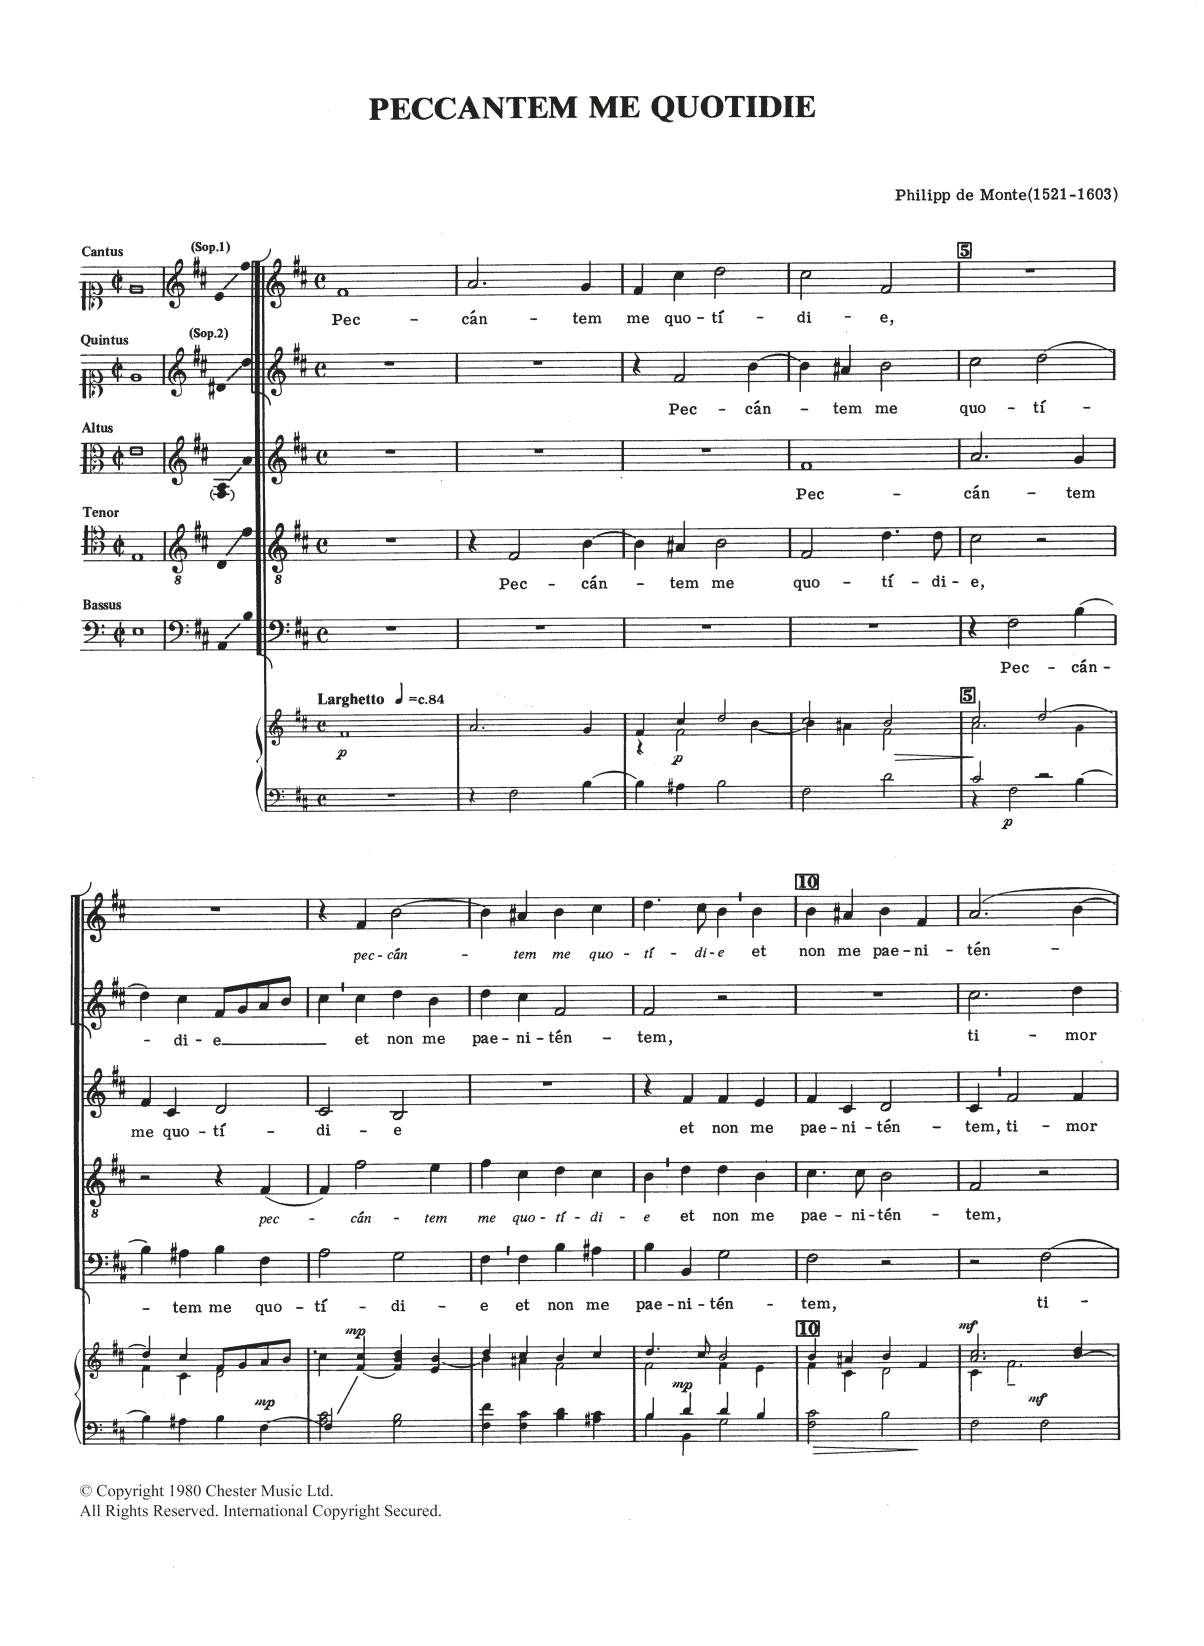 Philippe de Monte Peccantem Me Quotidie Sheet Music Notes & Chords for Choral SAATB - Download or Print PDF